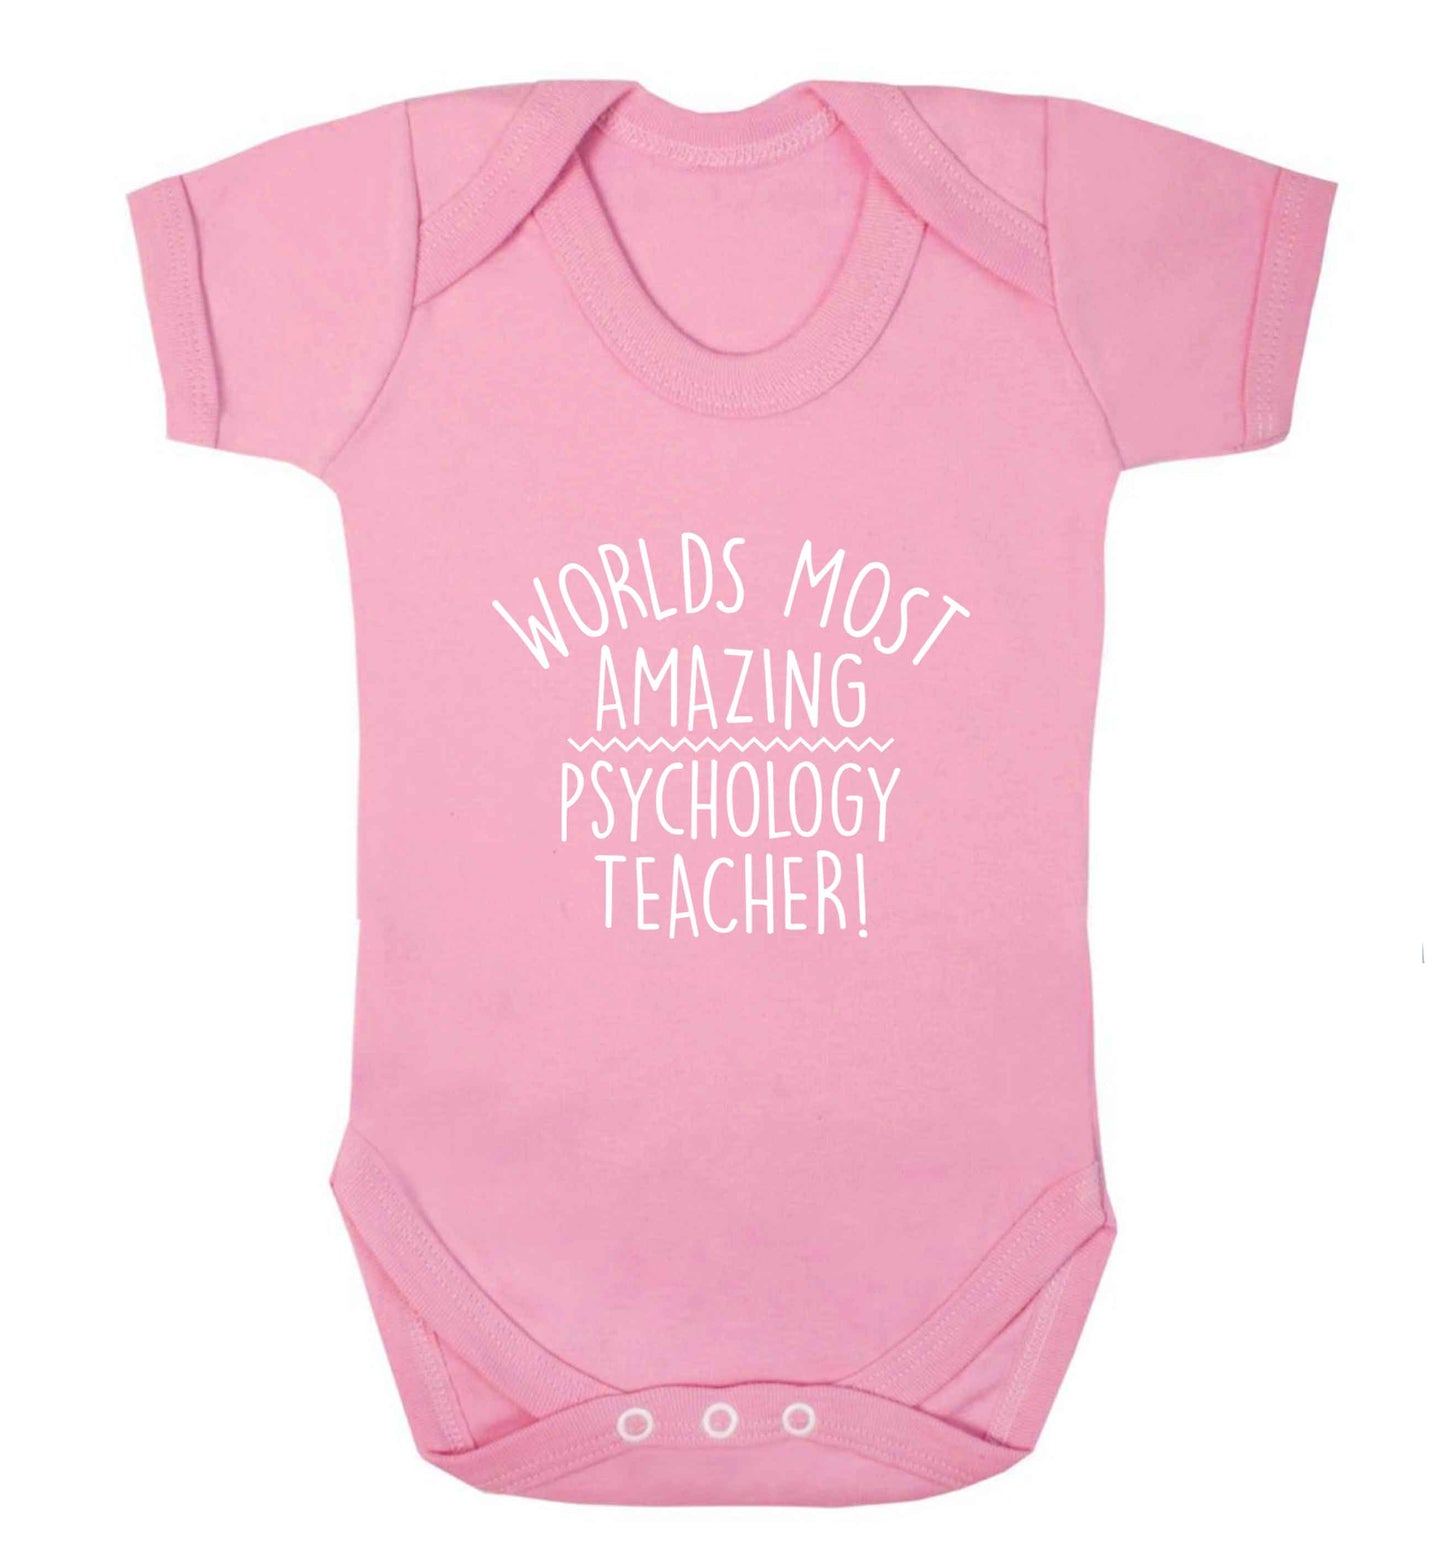 Worlds most amazing psychology teacher baby vest pale pink 18-24 months